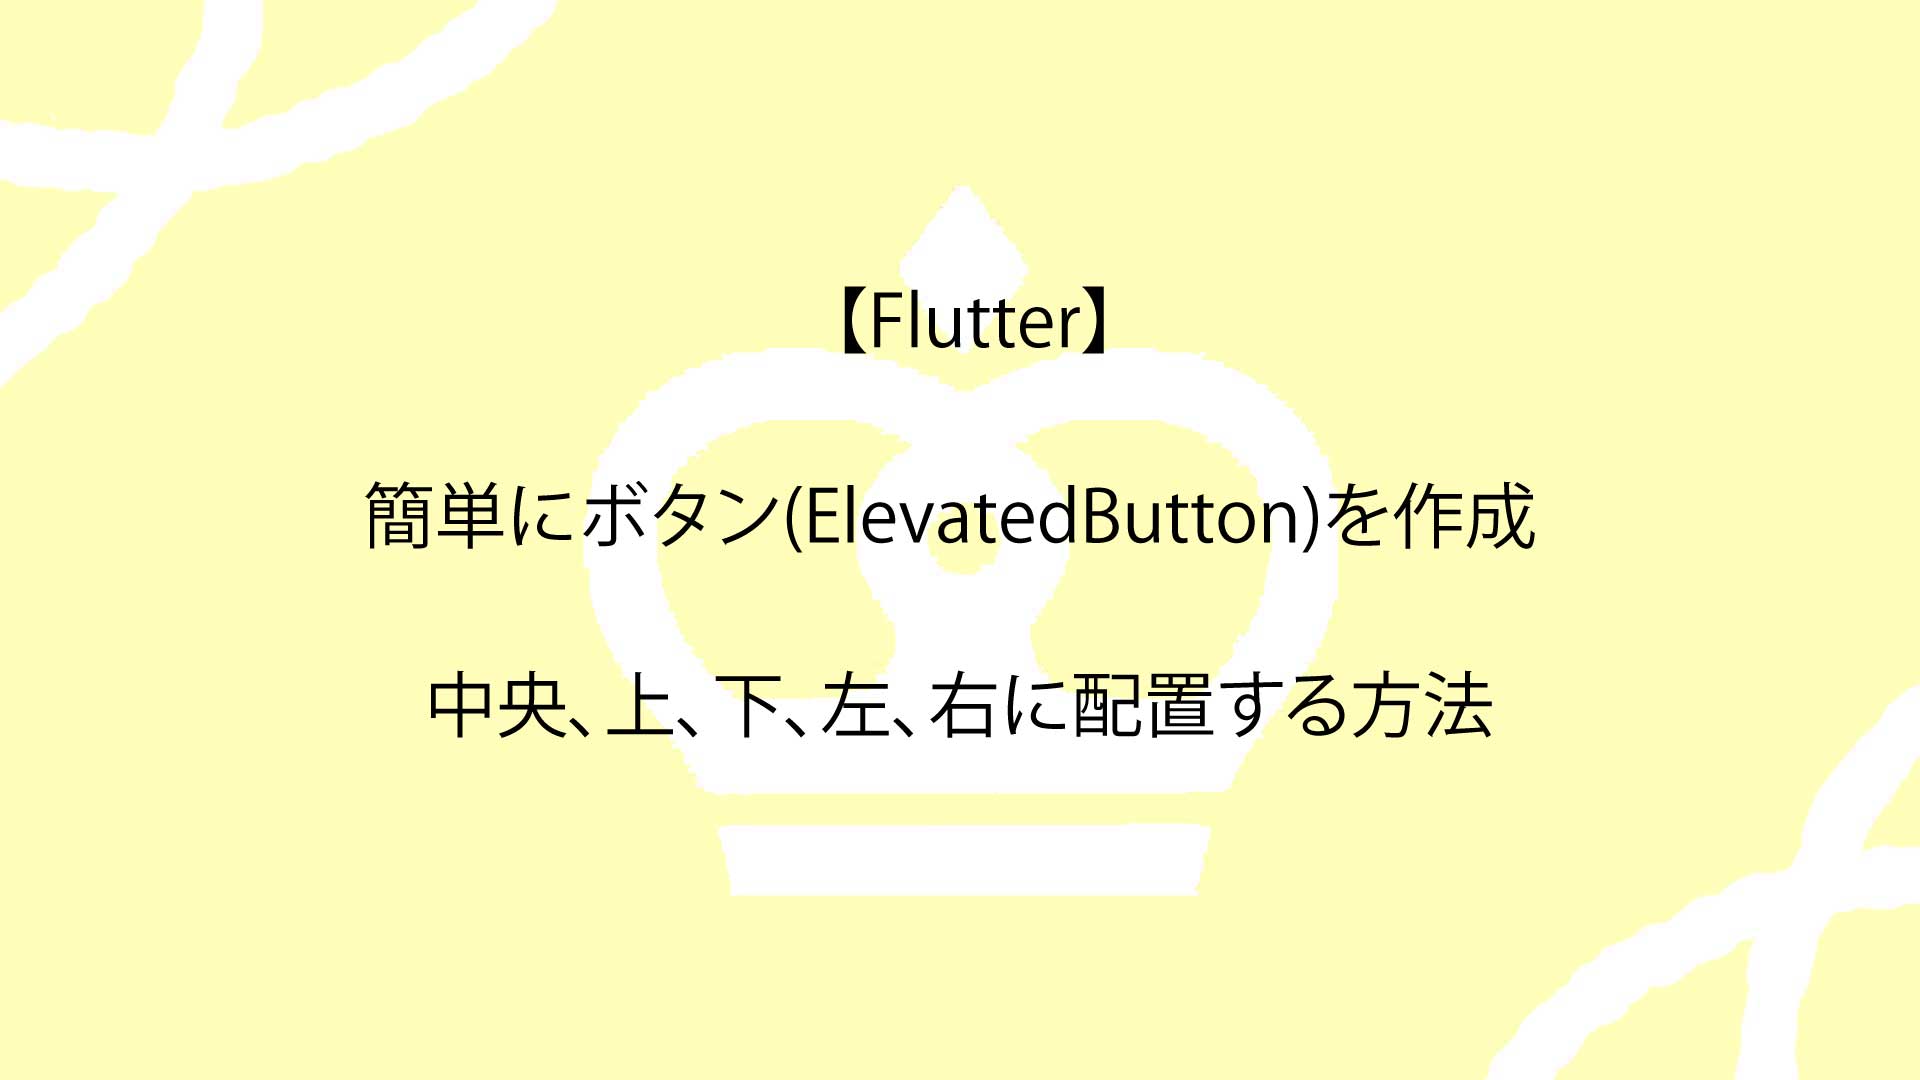 【Flutter】簡単にボタン(ElevatedButton)を作成し、中央(Center)、上下左右に配置する方法